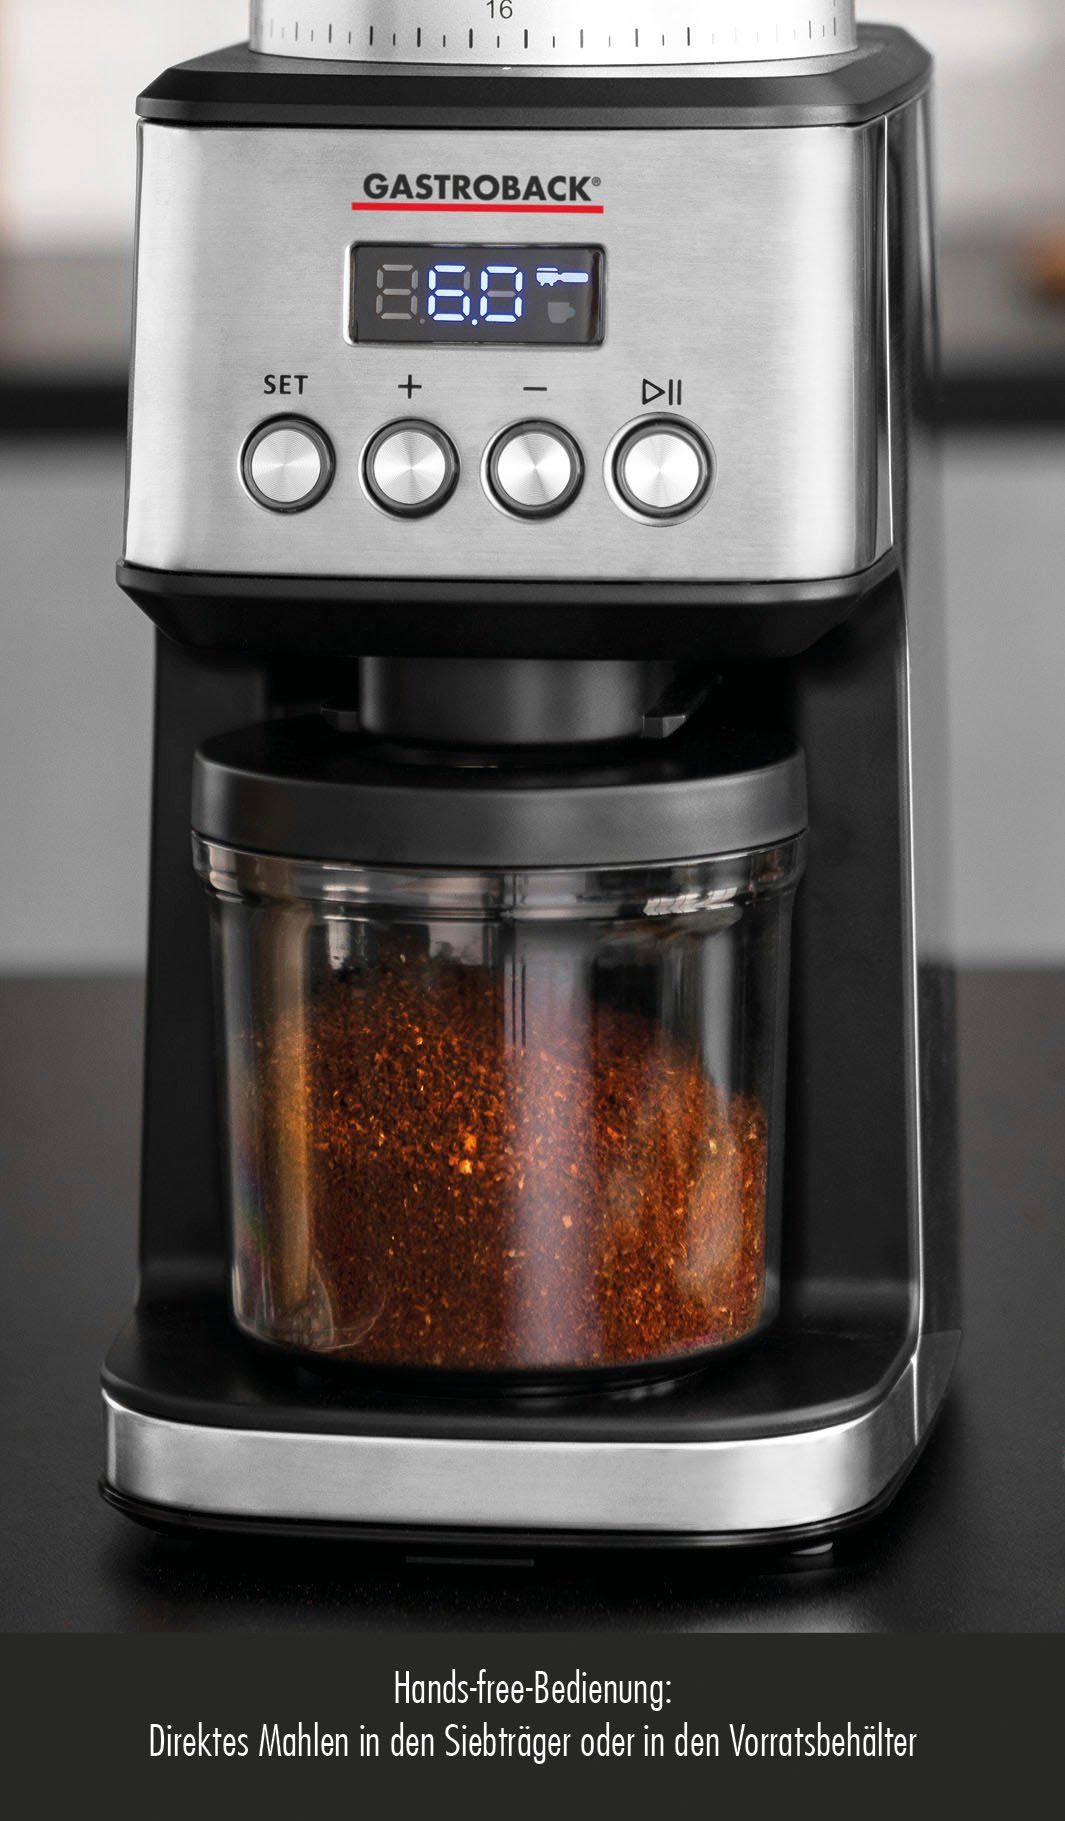 320 Design 42643 Digital, Gastroback Kaffeemühle Kegelmahlwerk, W, 180 Bohnenbehälter g